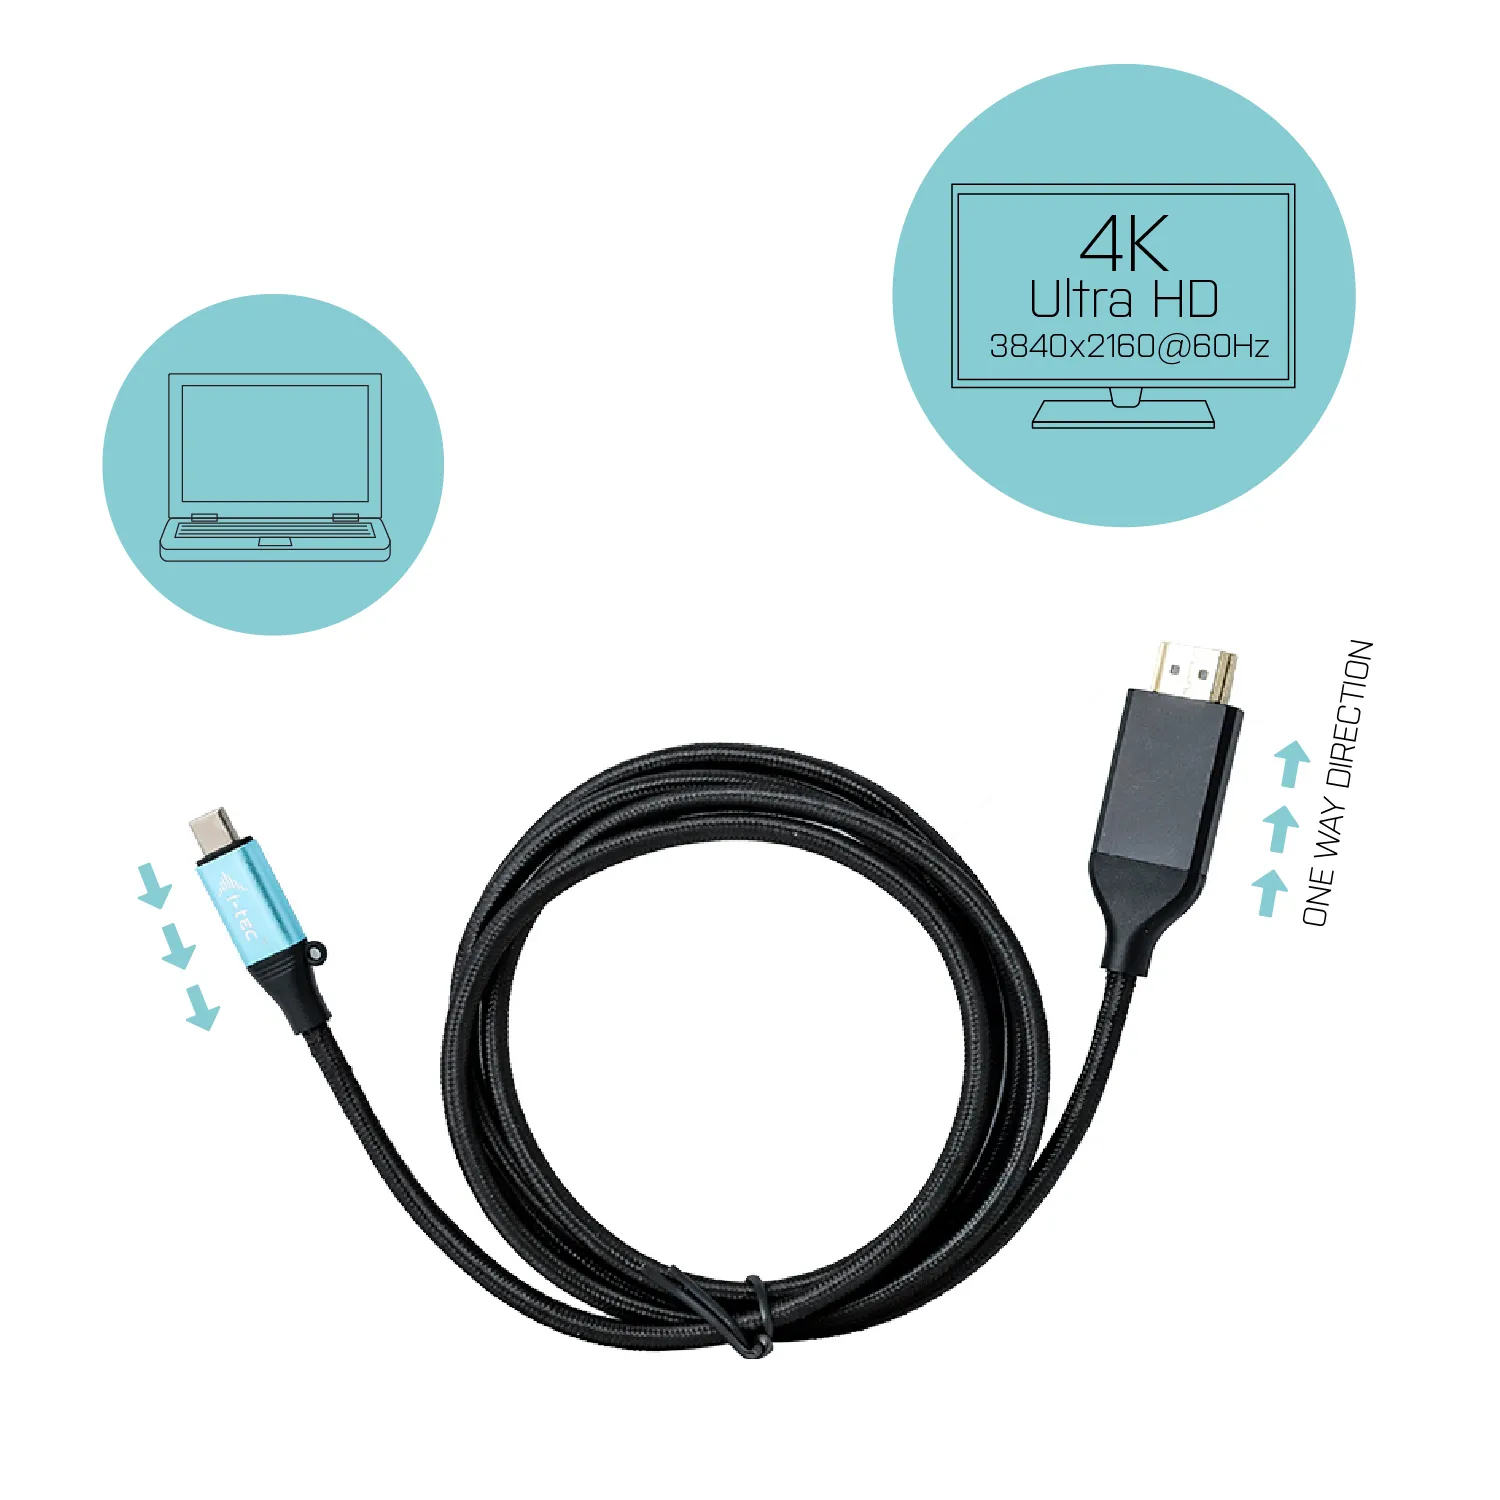 Vente I-TEC USB C HDMI Cable Adapter 4K 60Hz i-tec au meilleur prix - visuel 8